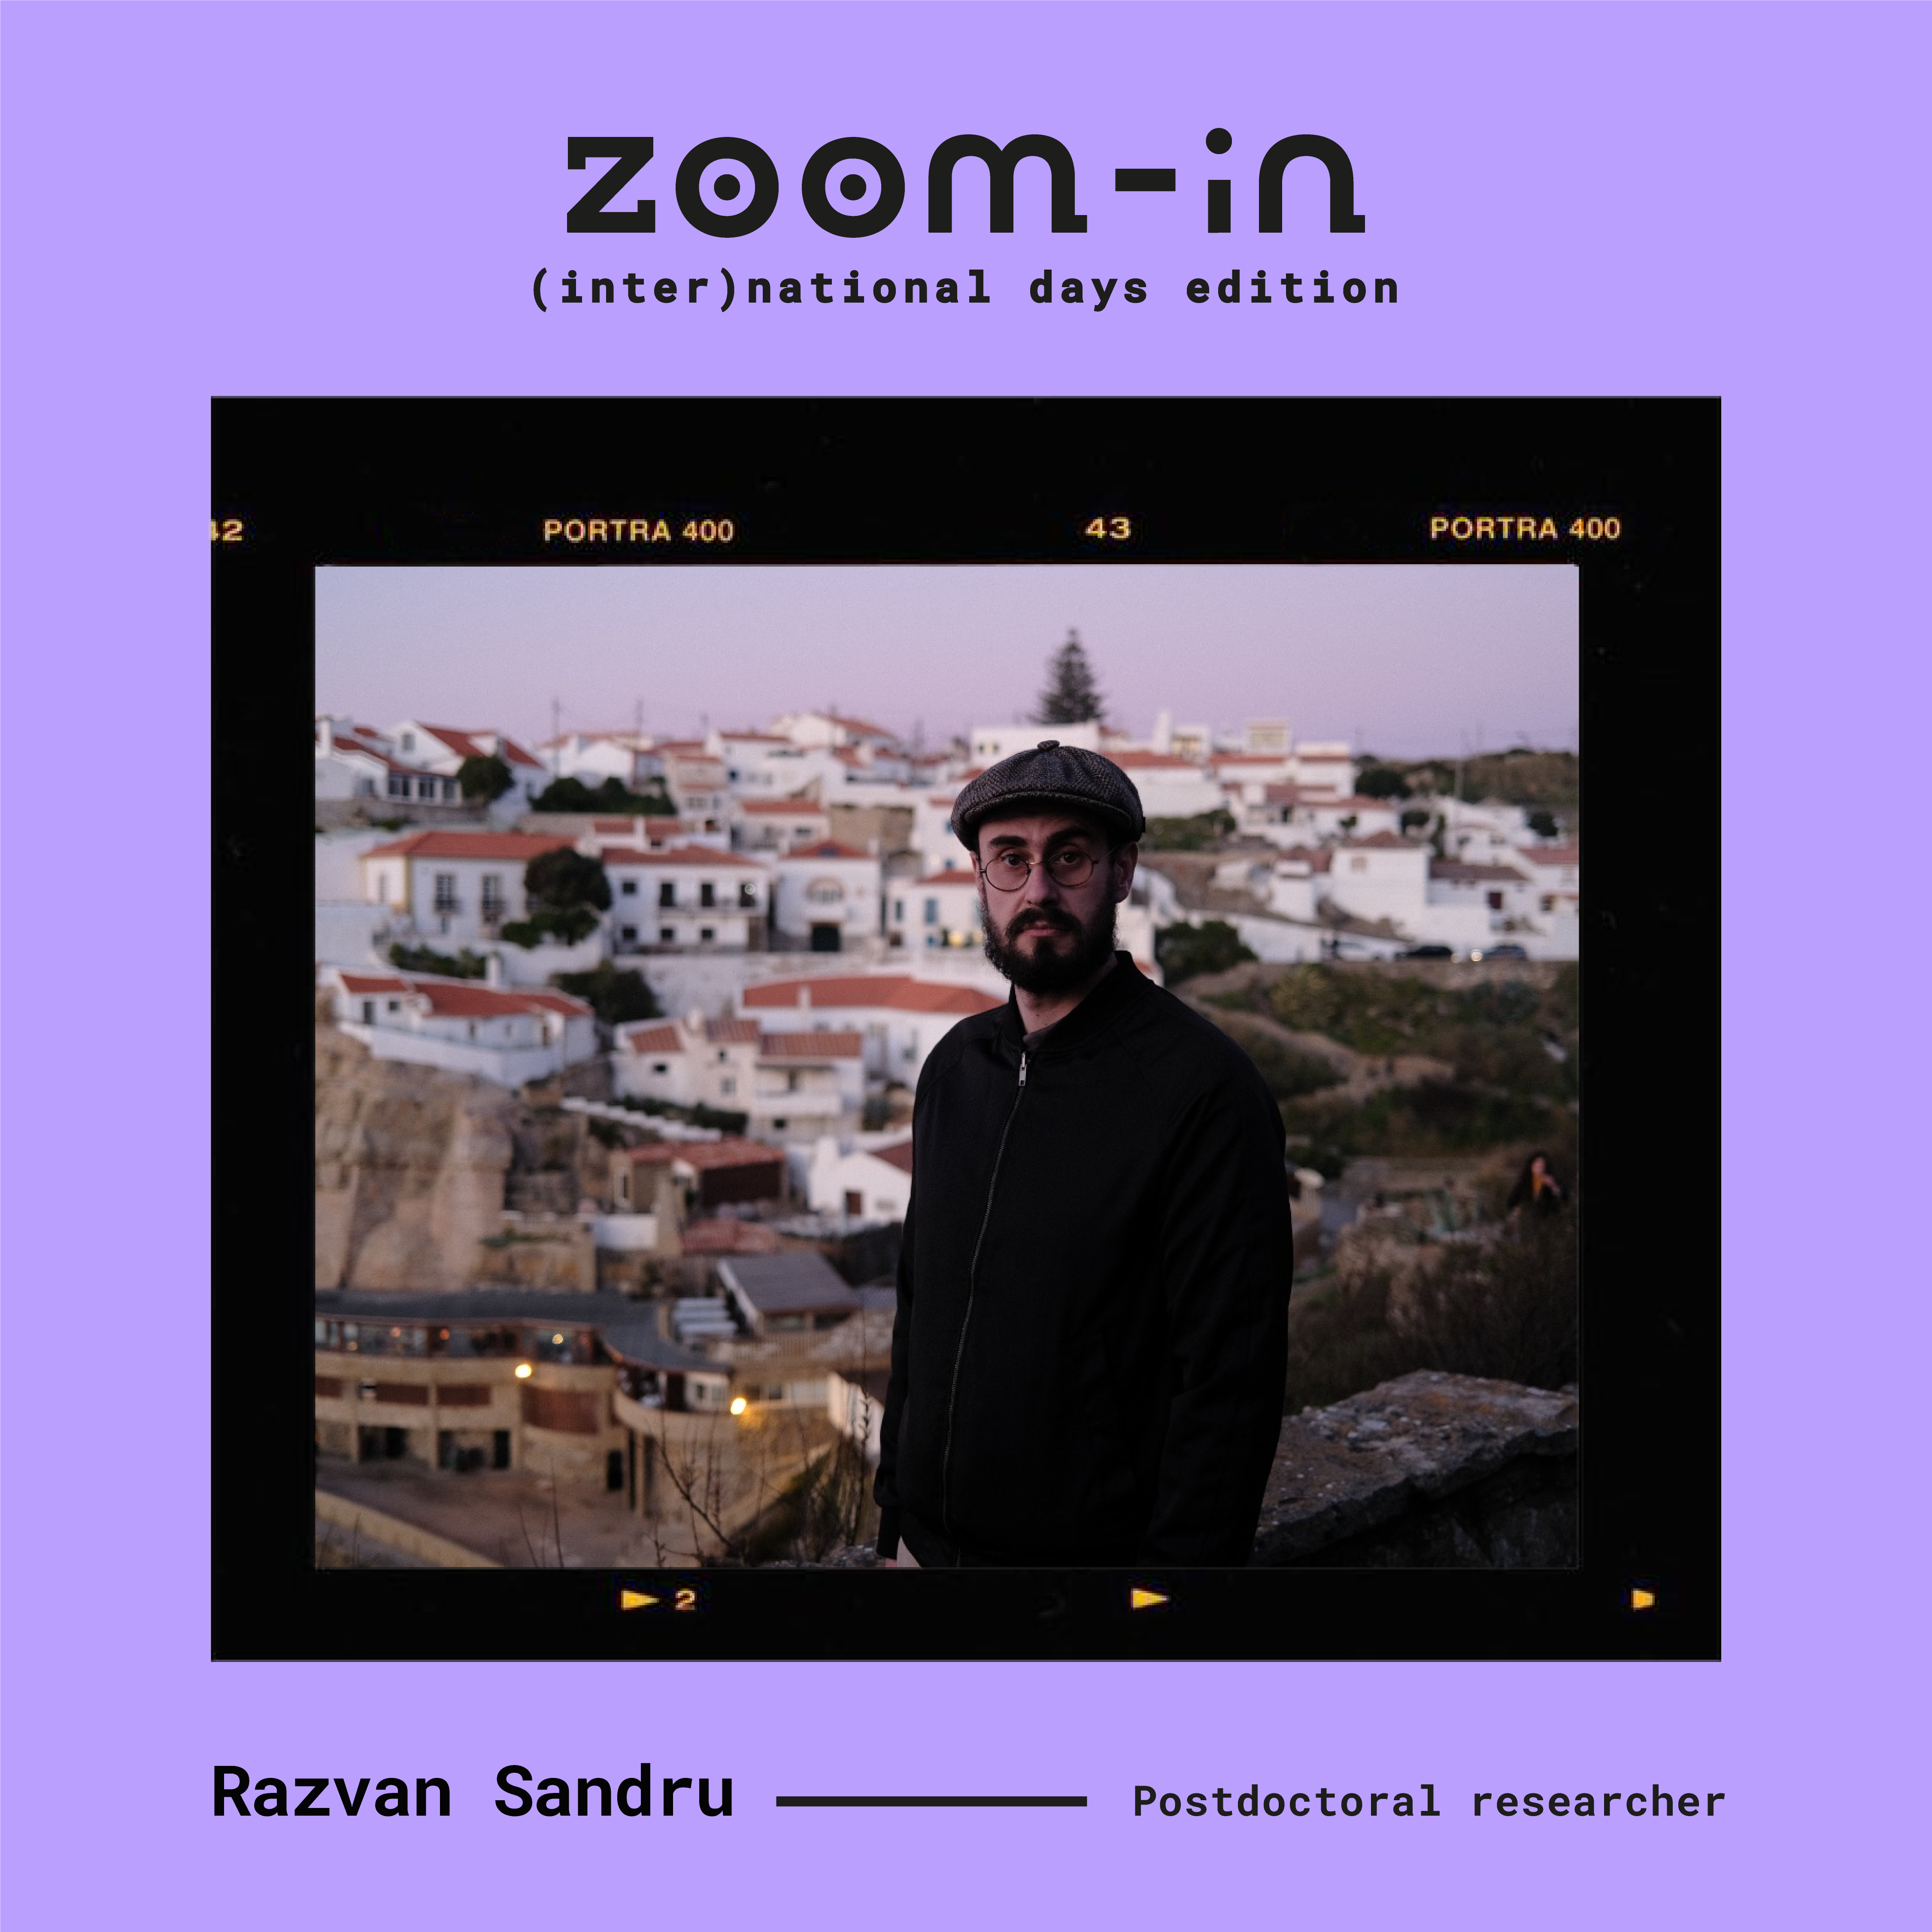 Zoom-In on Champalimaud - 3rd Edition - Razvan Sandru on World Thinking Day